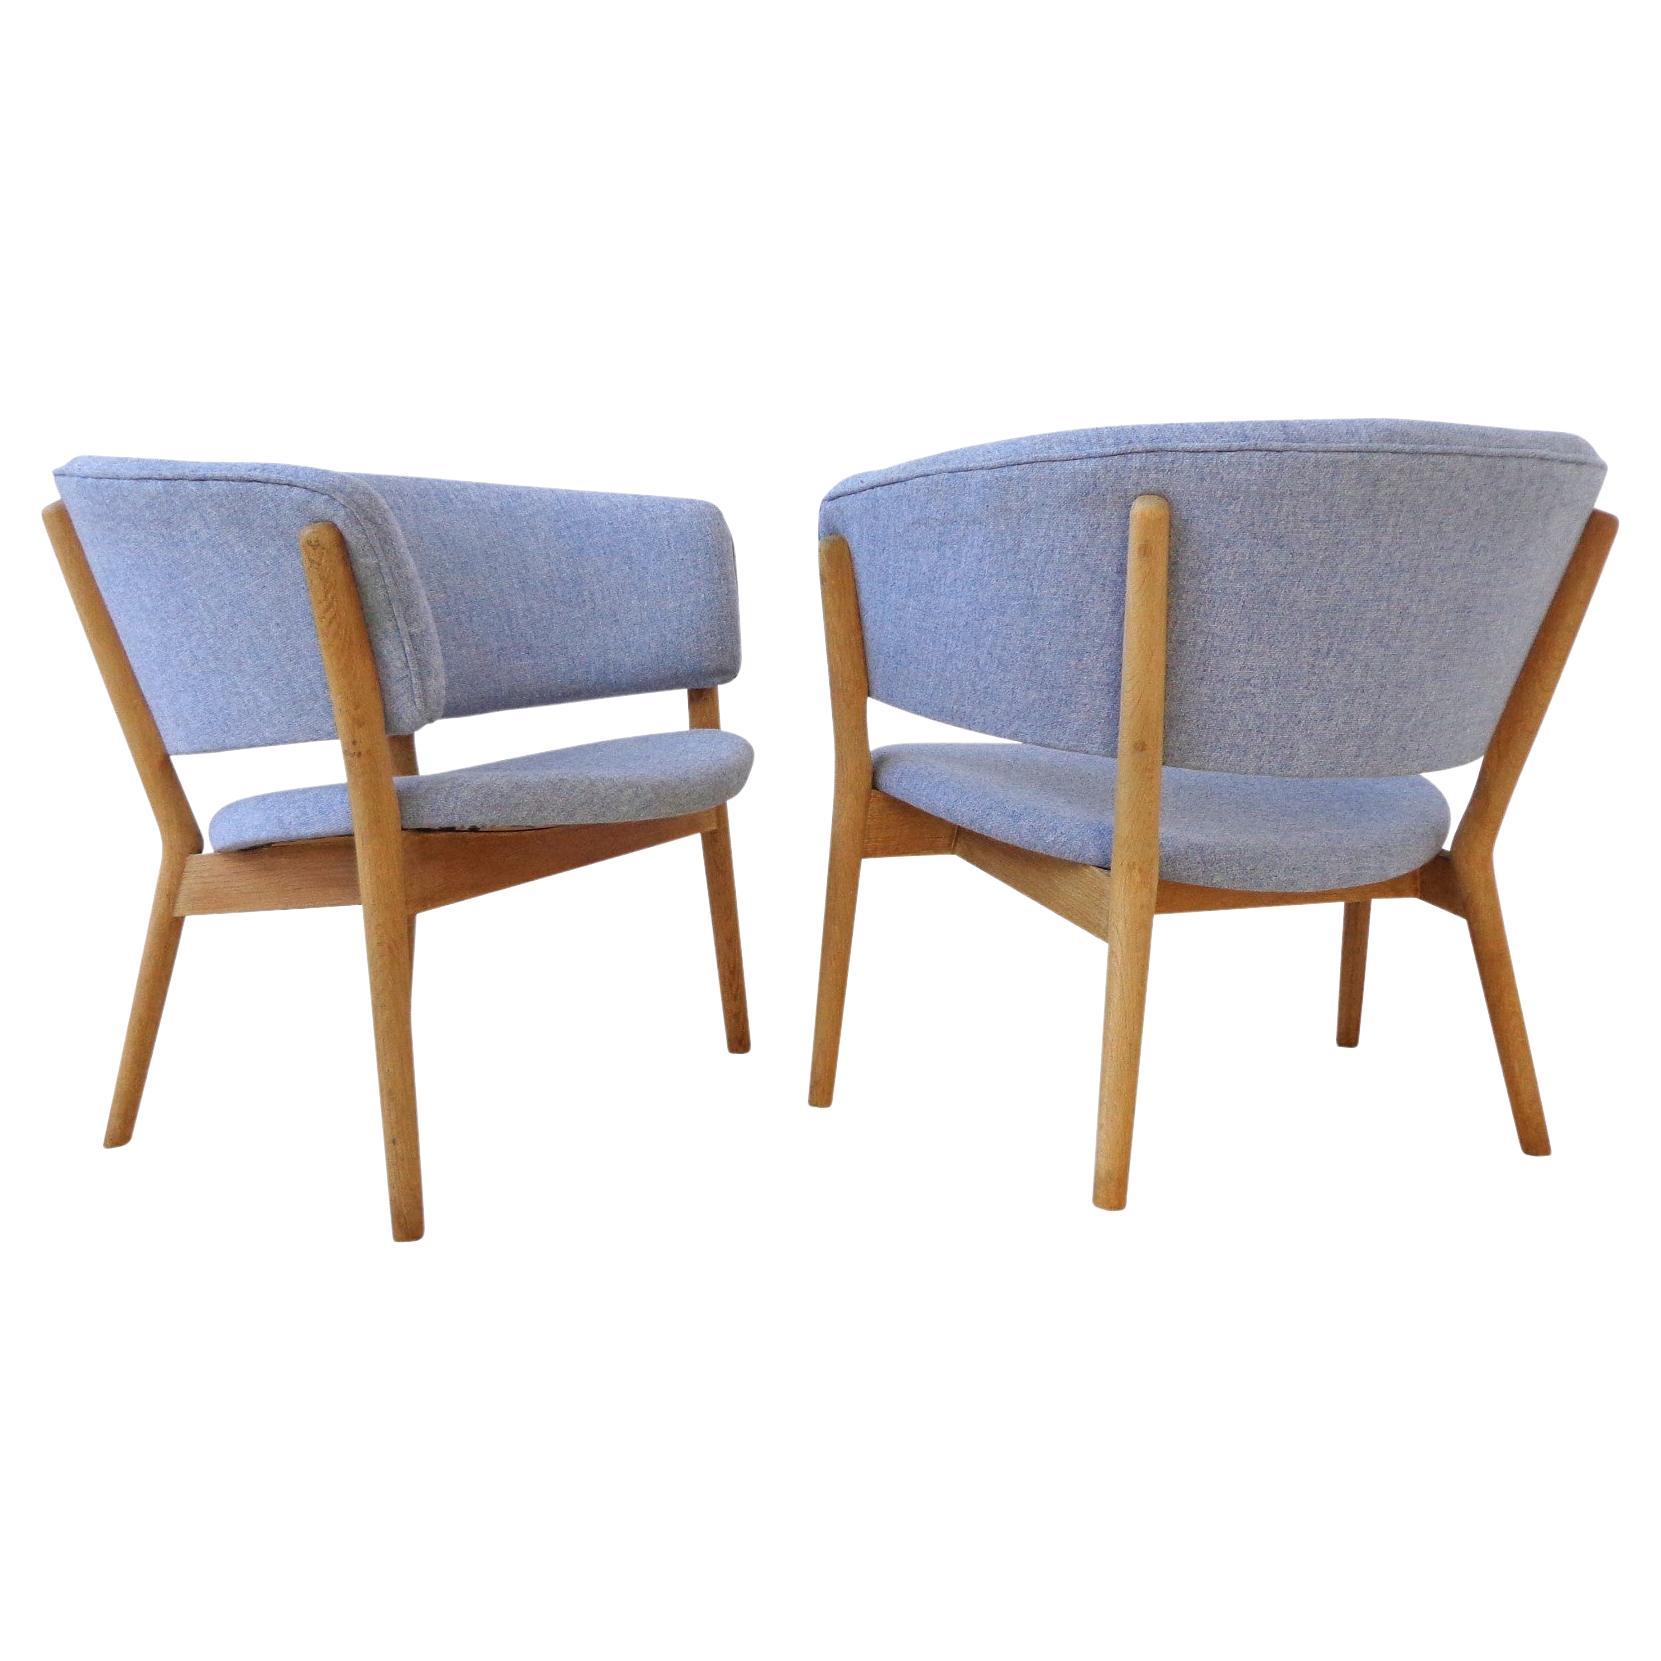 Nanna Ditzel Pair of Lounge Chairs in Wool by Soren Willadsen, Denmark, 1950s For Sale